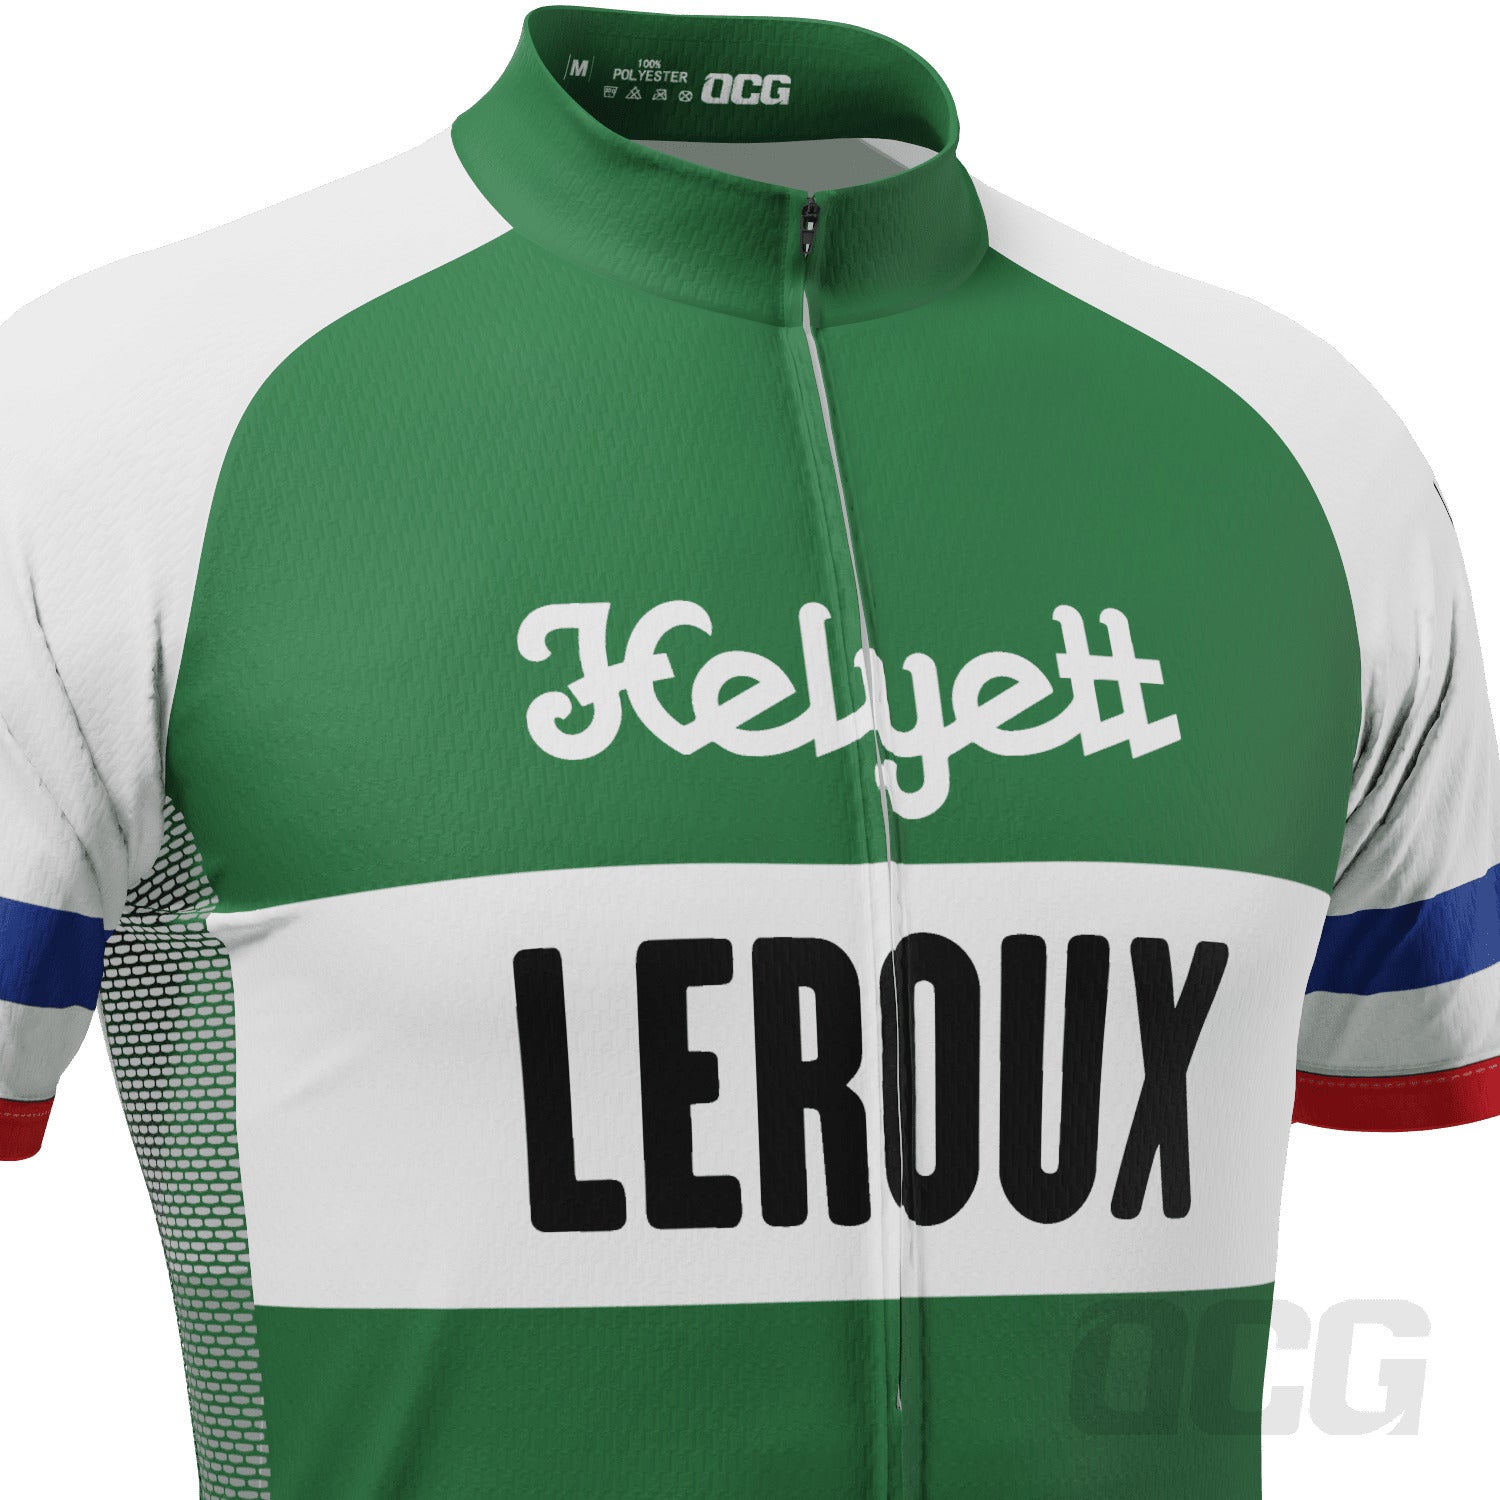 Men's Helyett LeRoux Short Sleeve Cycling Jersey